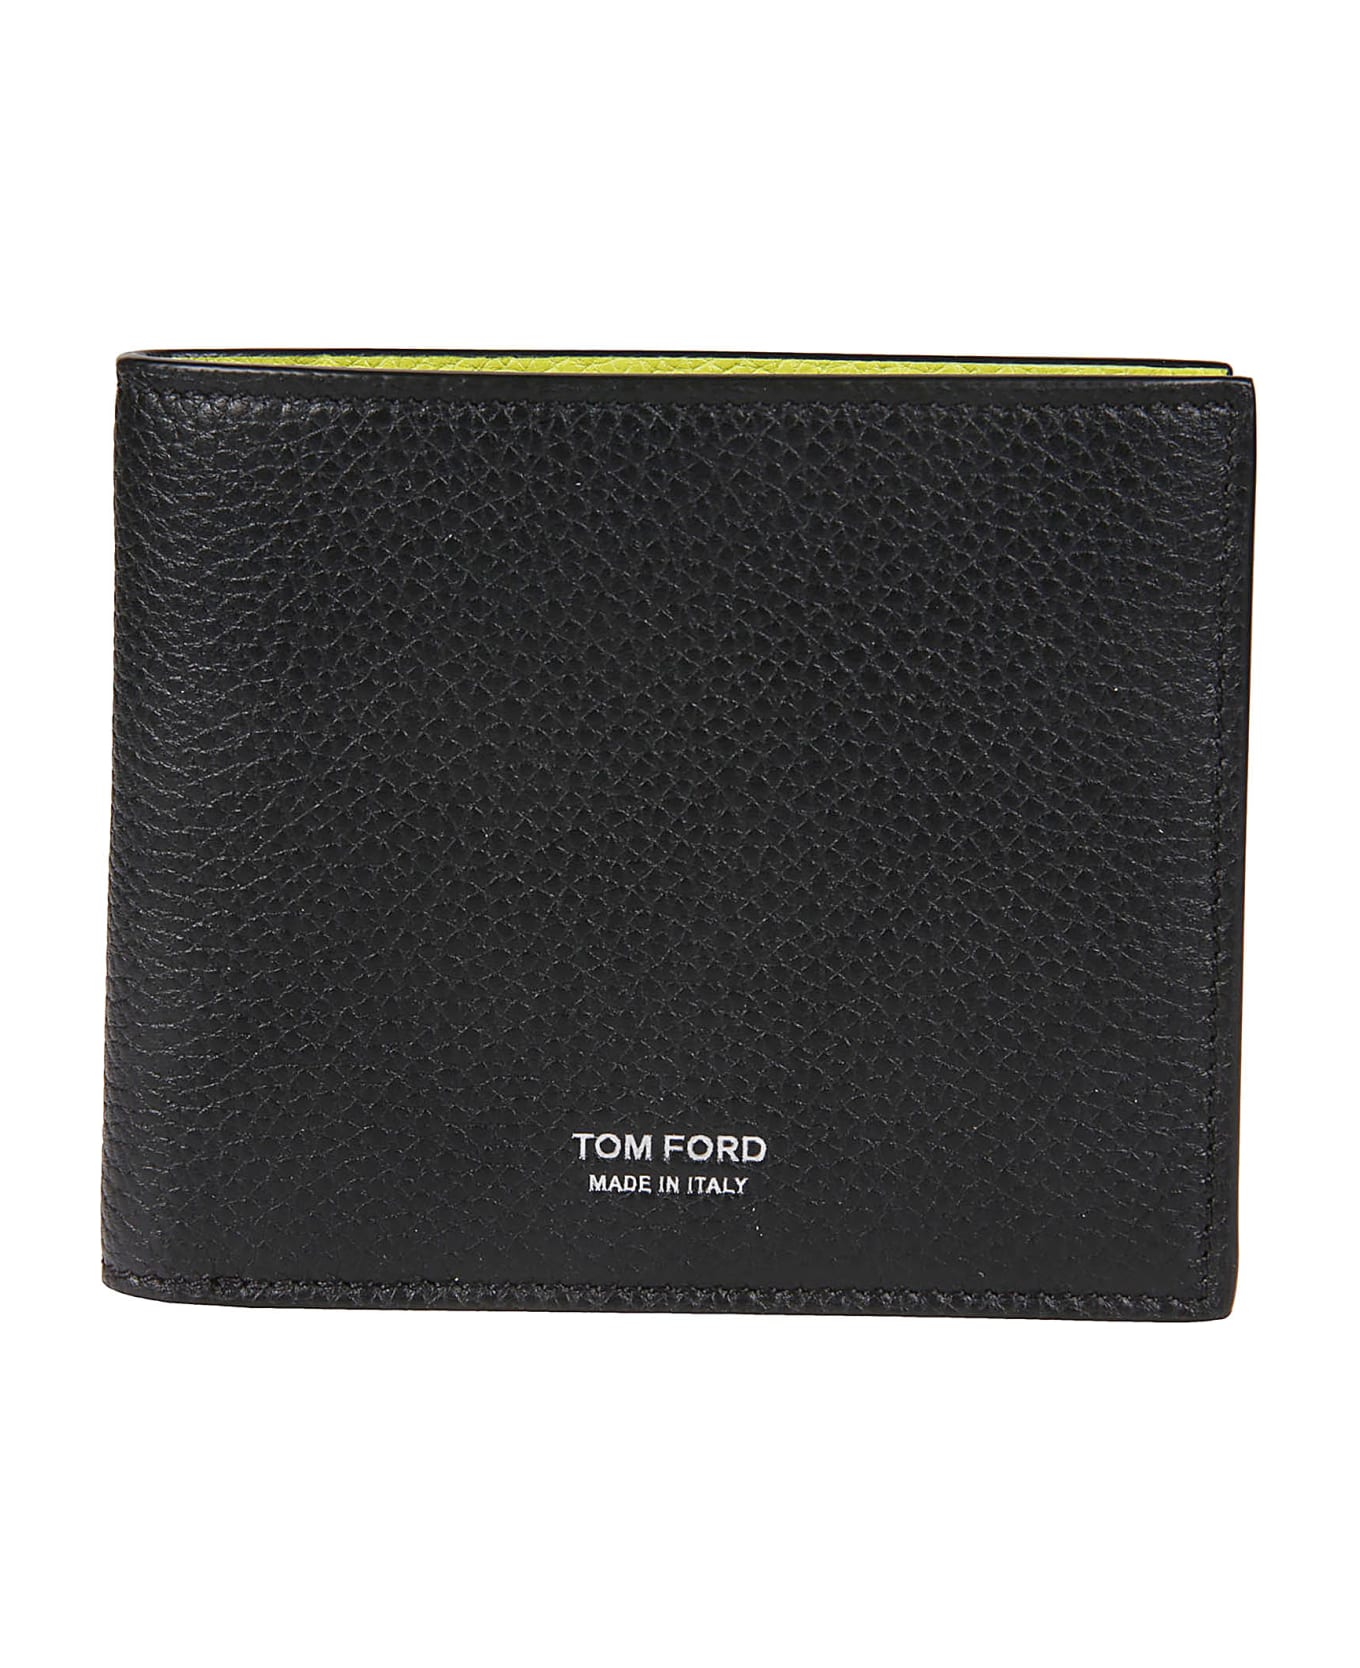 Tom Ford Logo Wallet - Black/lime